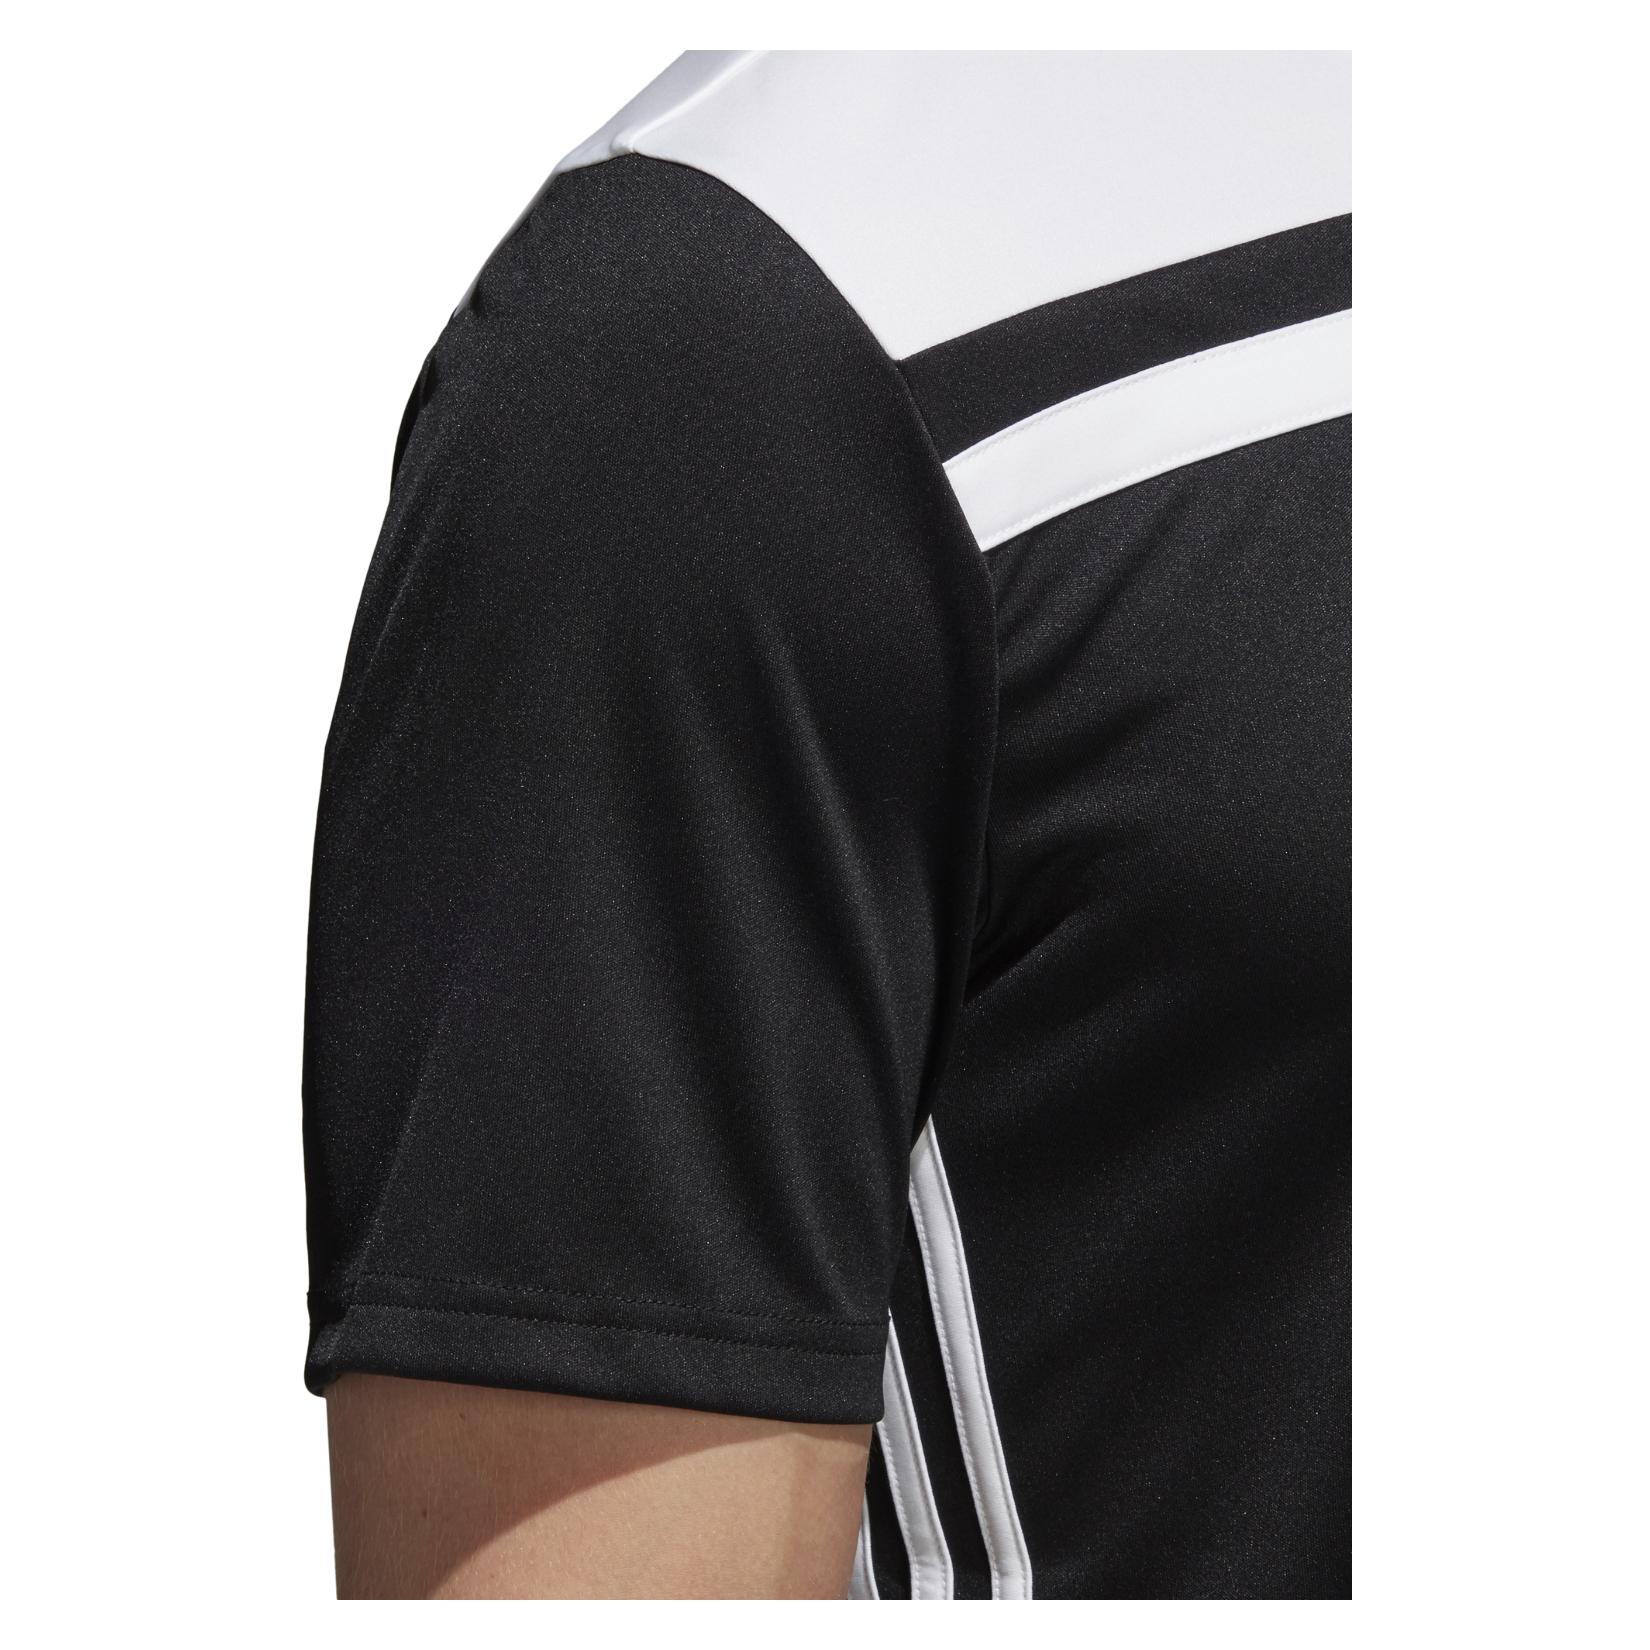 Adidas Regista 18 Short Sleeve Shirt Black-White